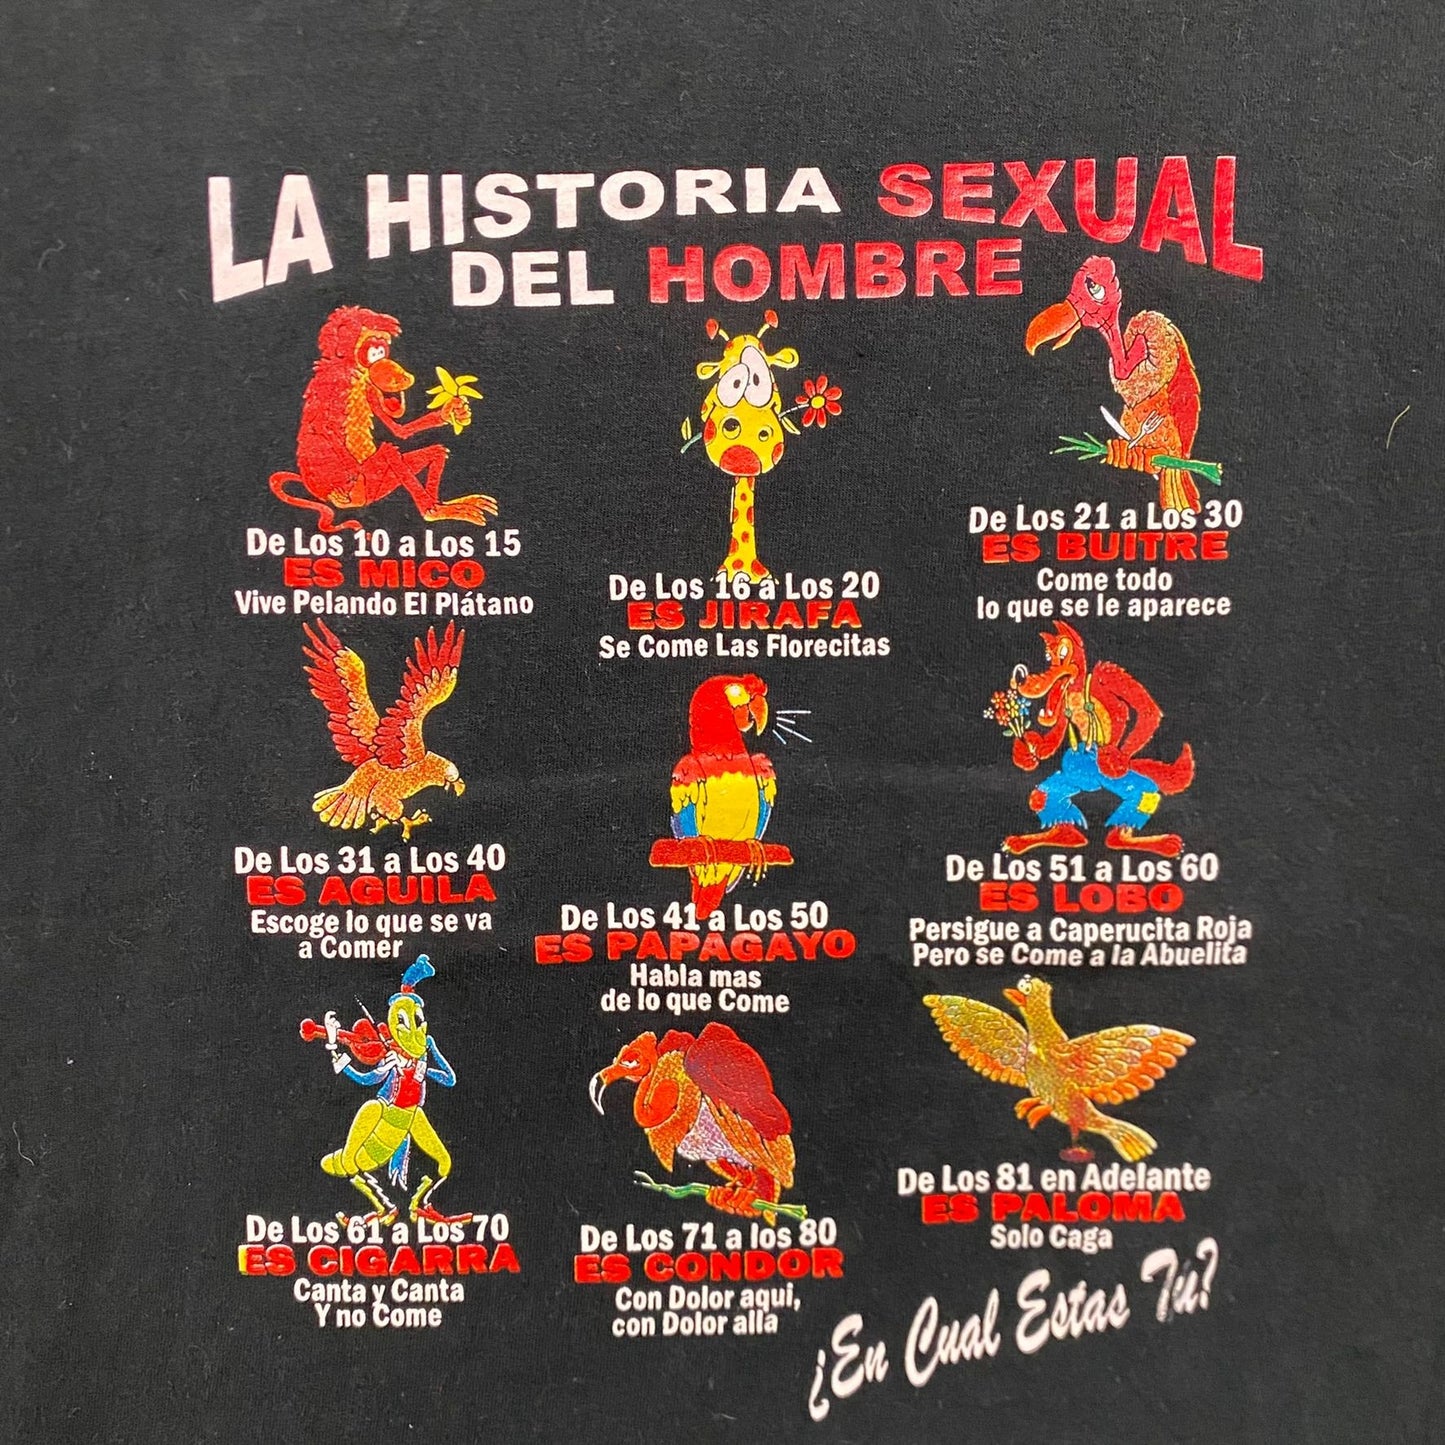 Vintage Y2K Essential Sex Humor Funny Spanish T-Shirt